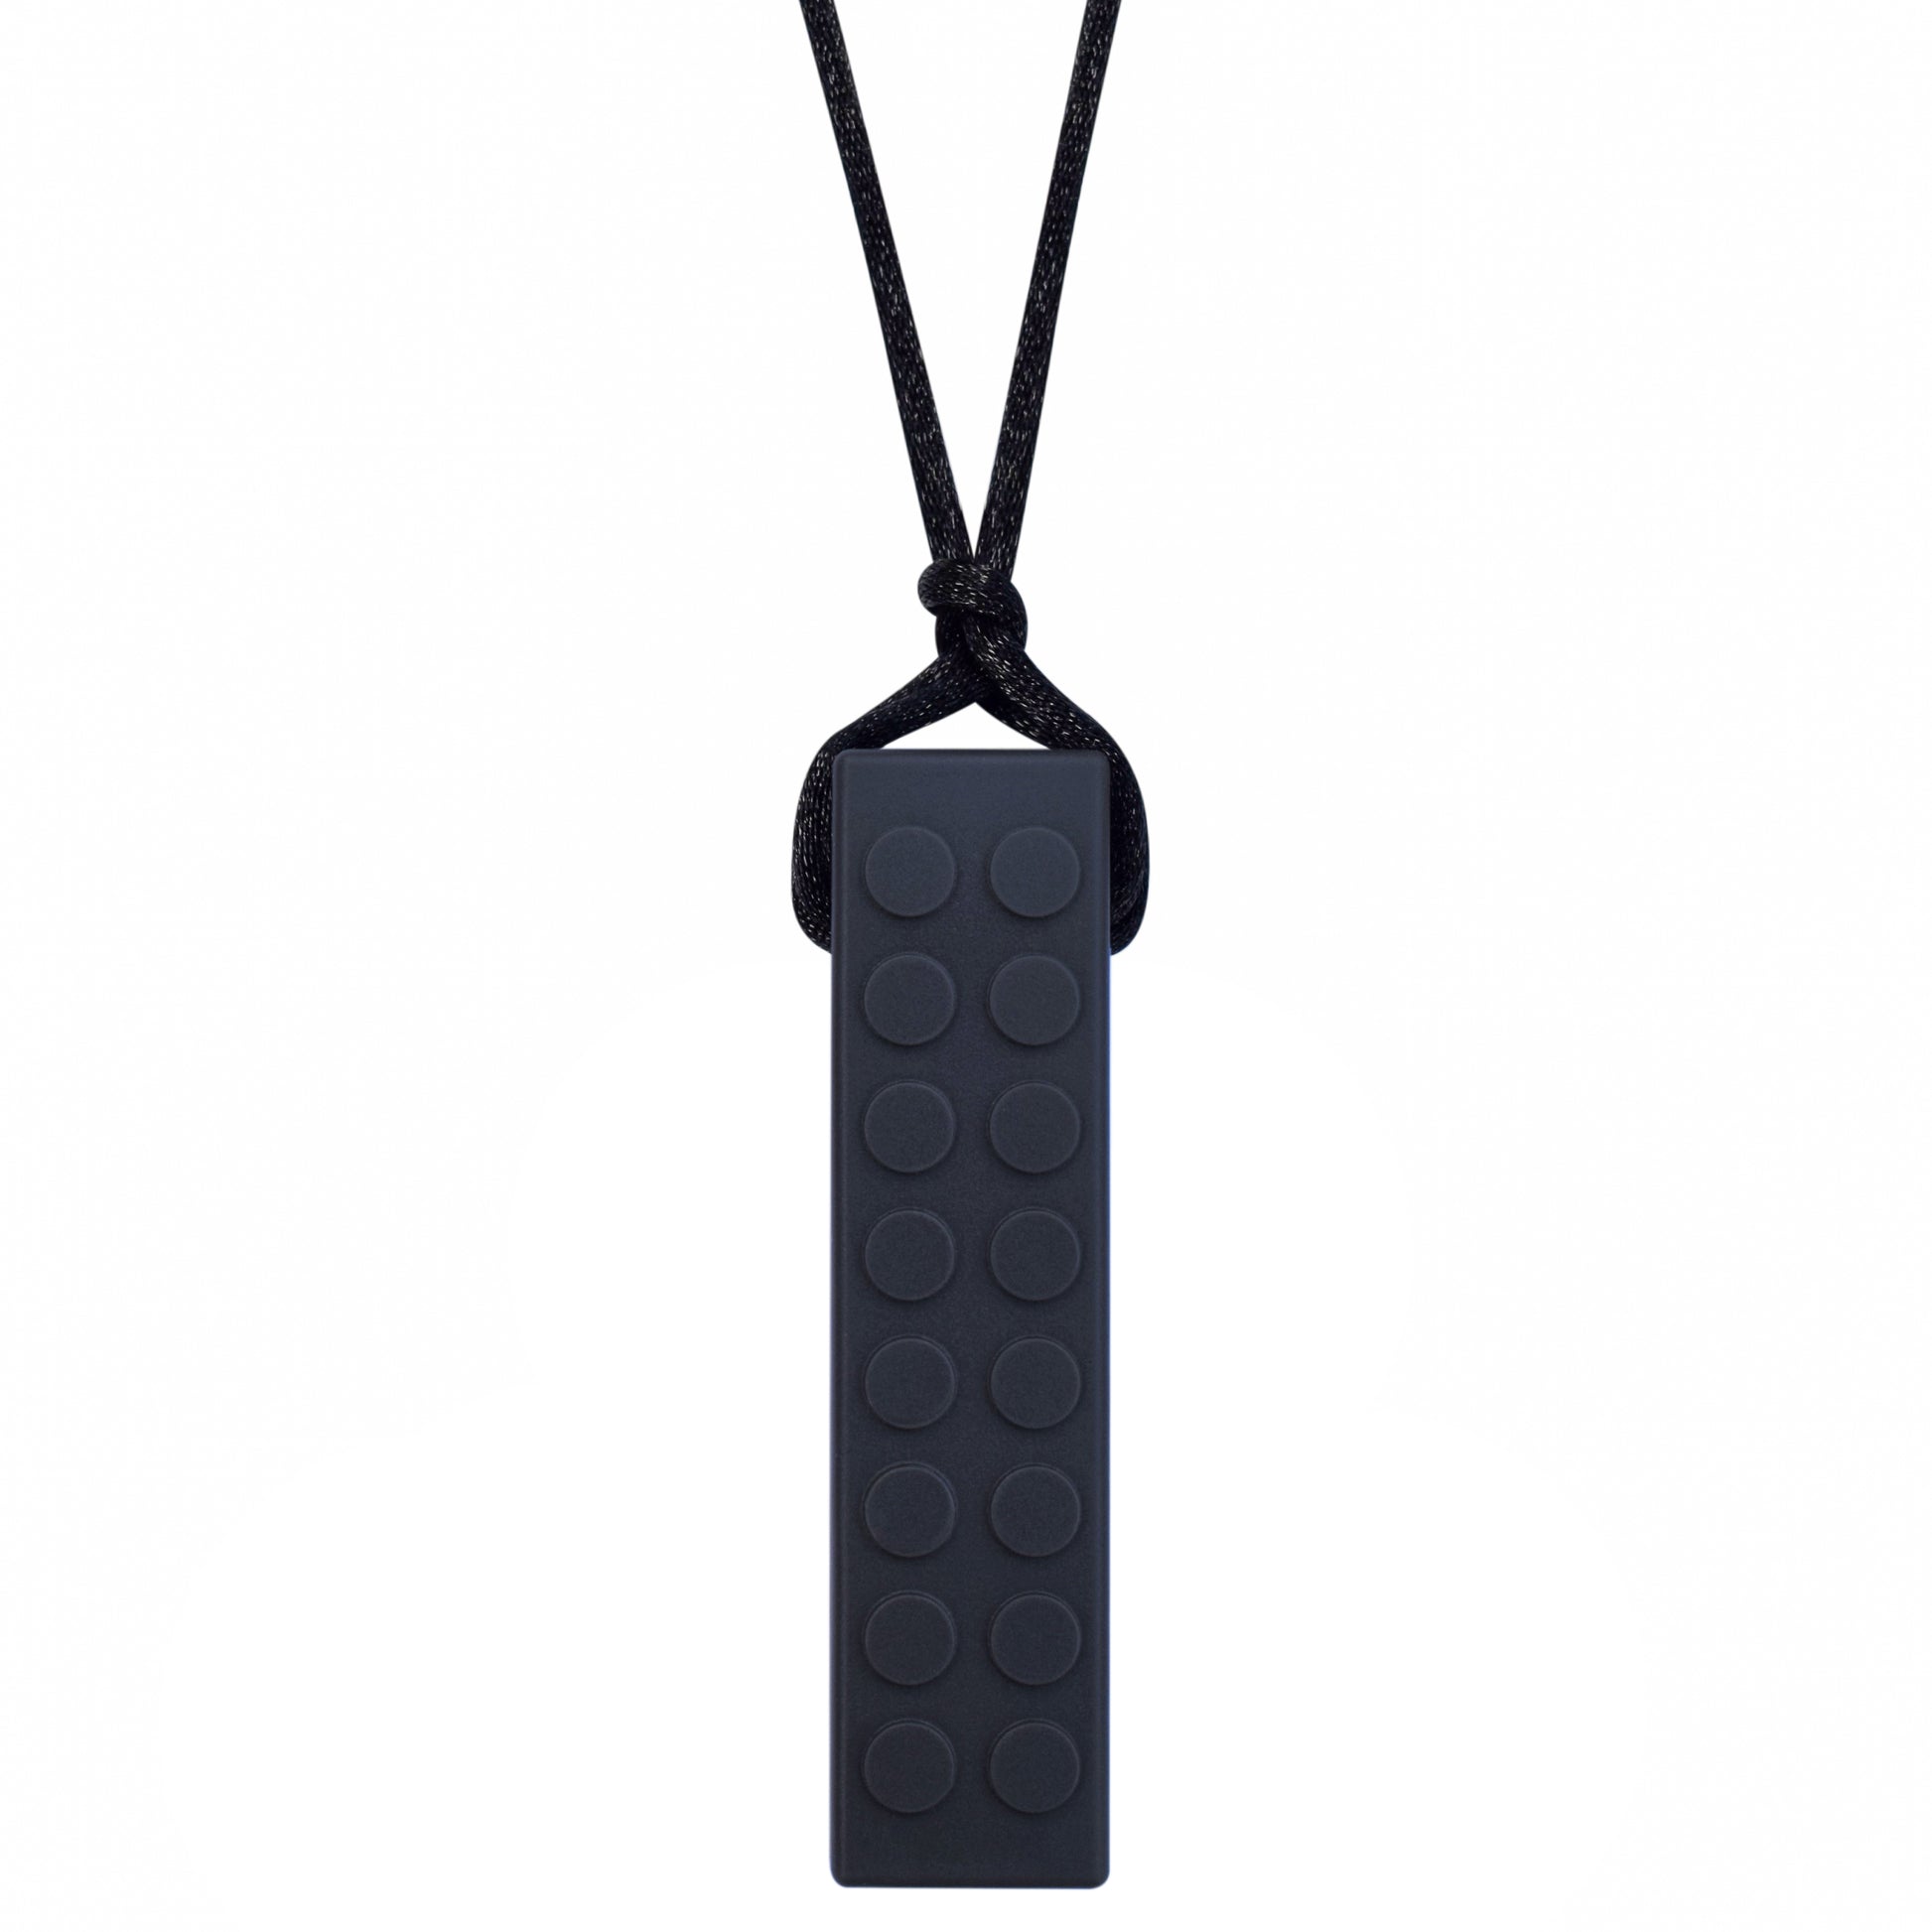 LEGO Brick style chewelry in black